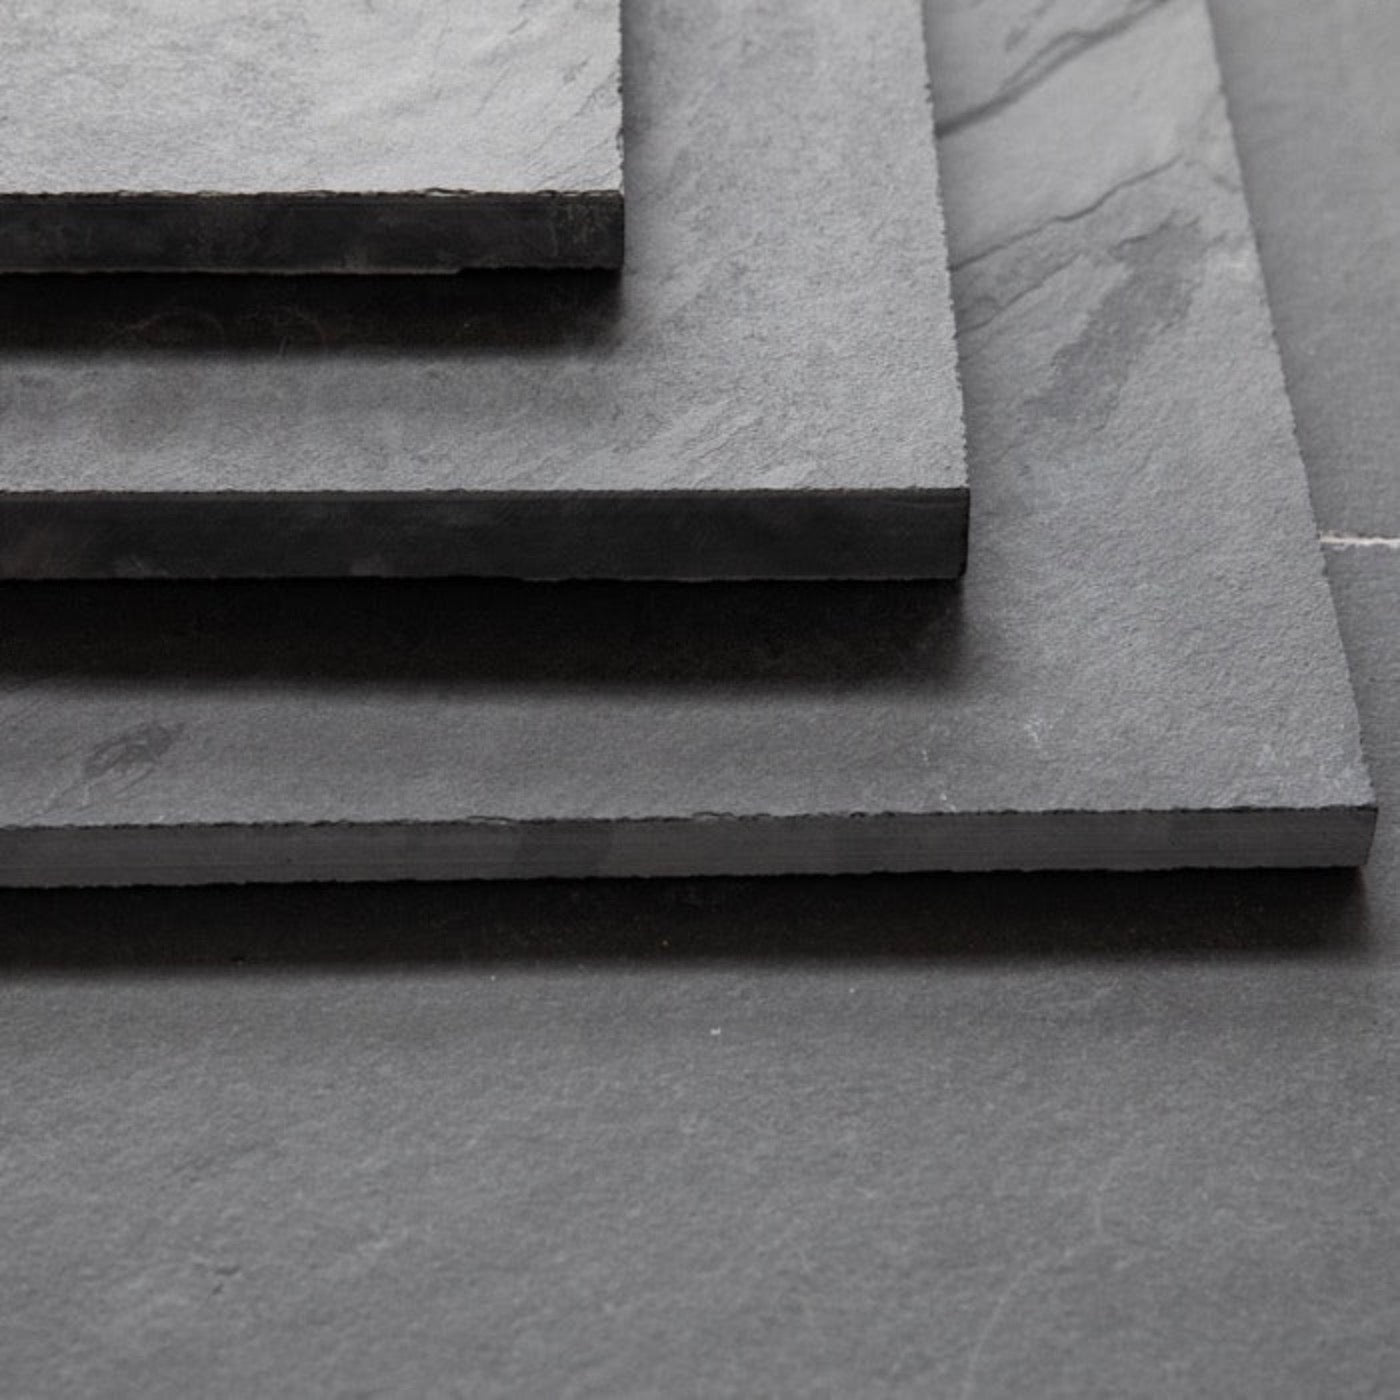 Black Slate Paving Patio Slabs | 900 x 600 x 20 mm slabs | £22 each collect Milton Keynes